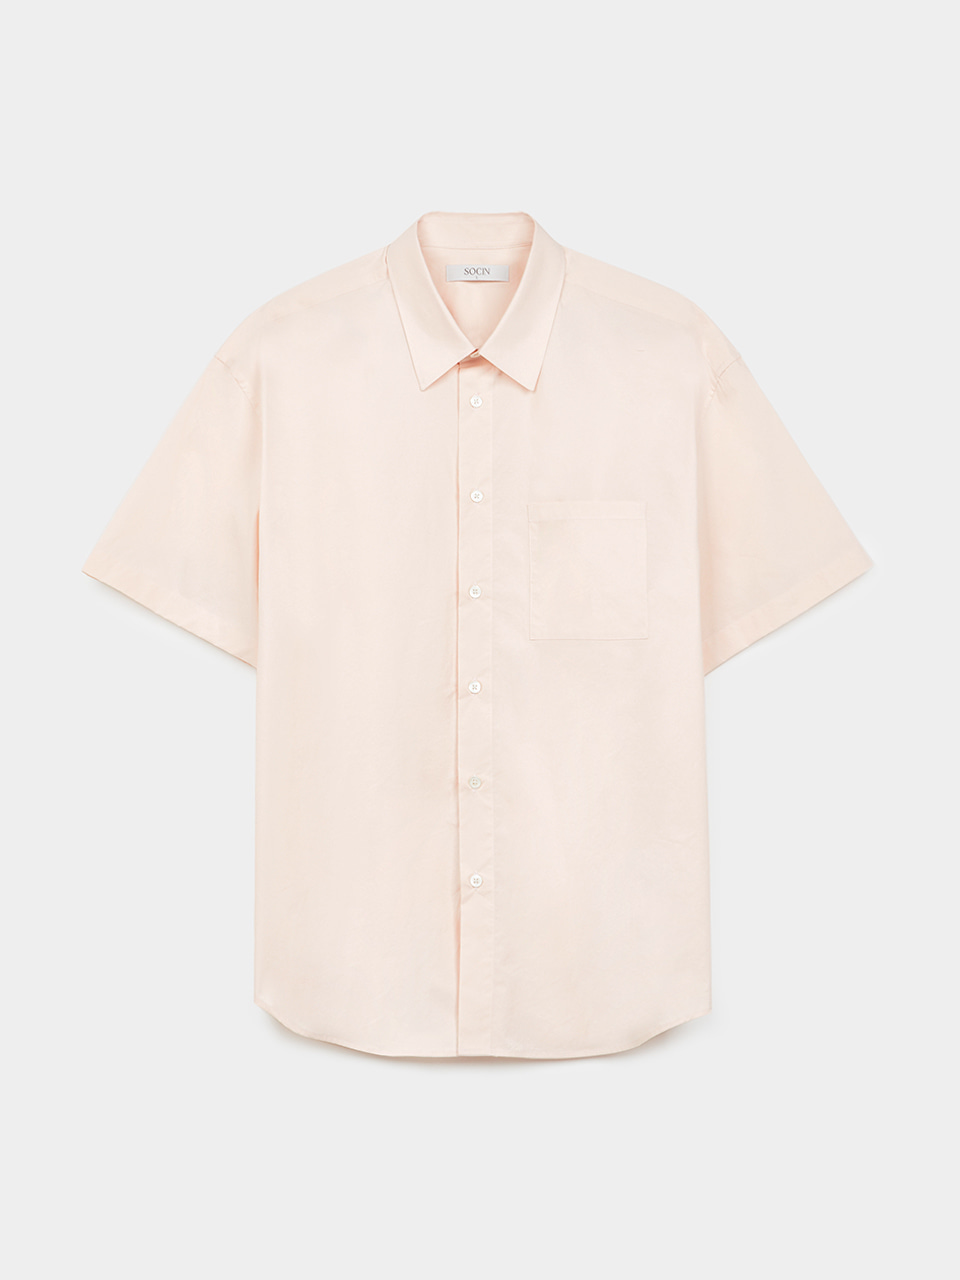 Washer Cotton Half Shirts (Light Pink)